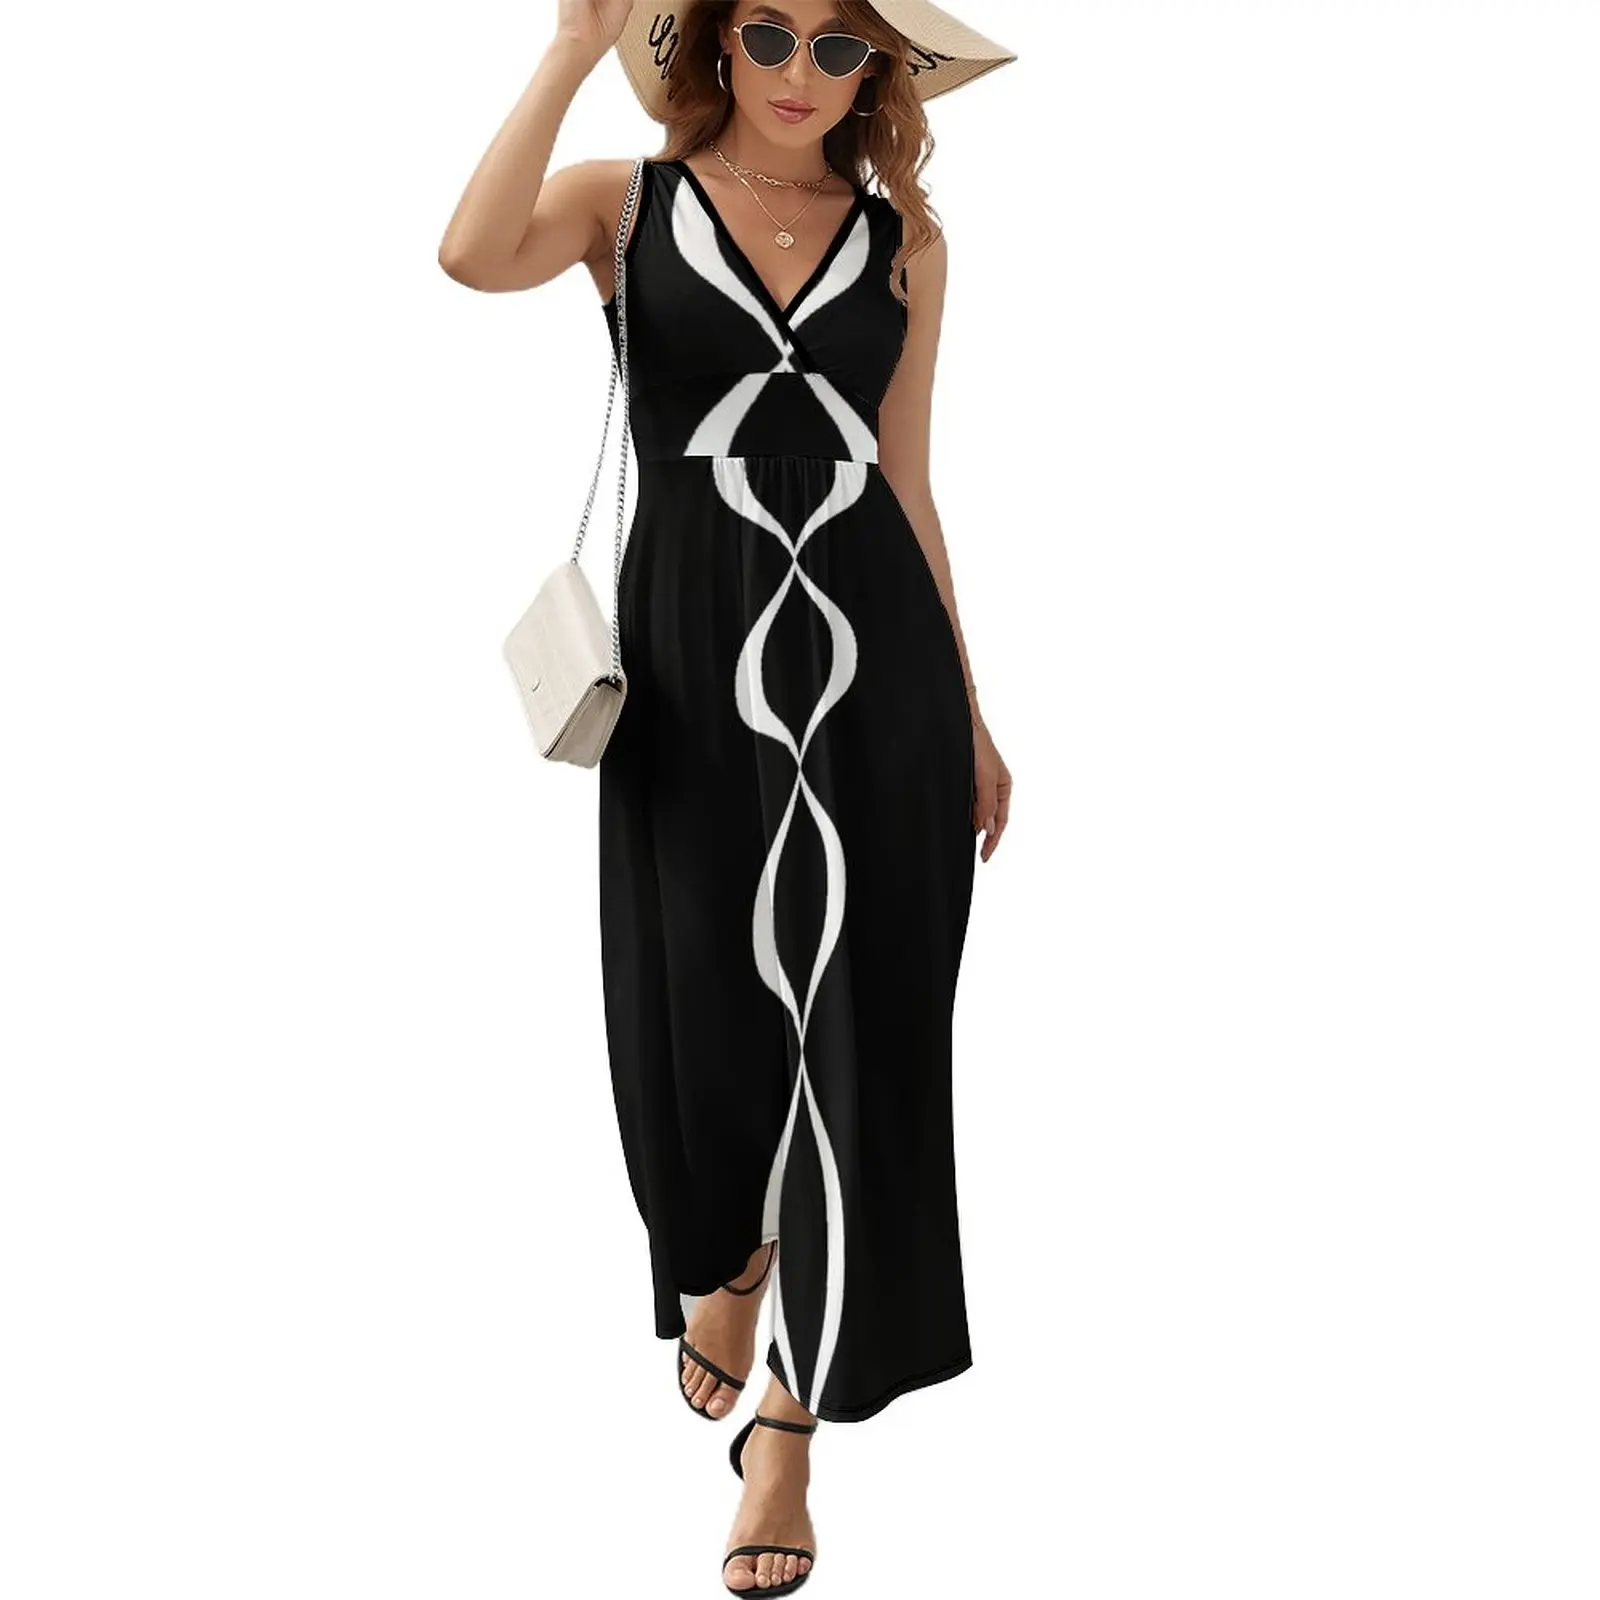 

Black & White Mod Loop Sleeveless Dress Dress vintage Summer women's clothing luxury woman party dress